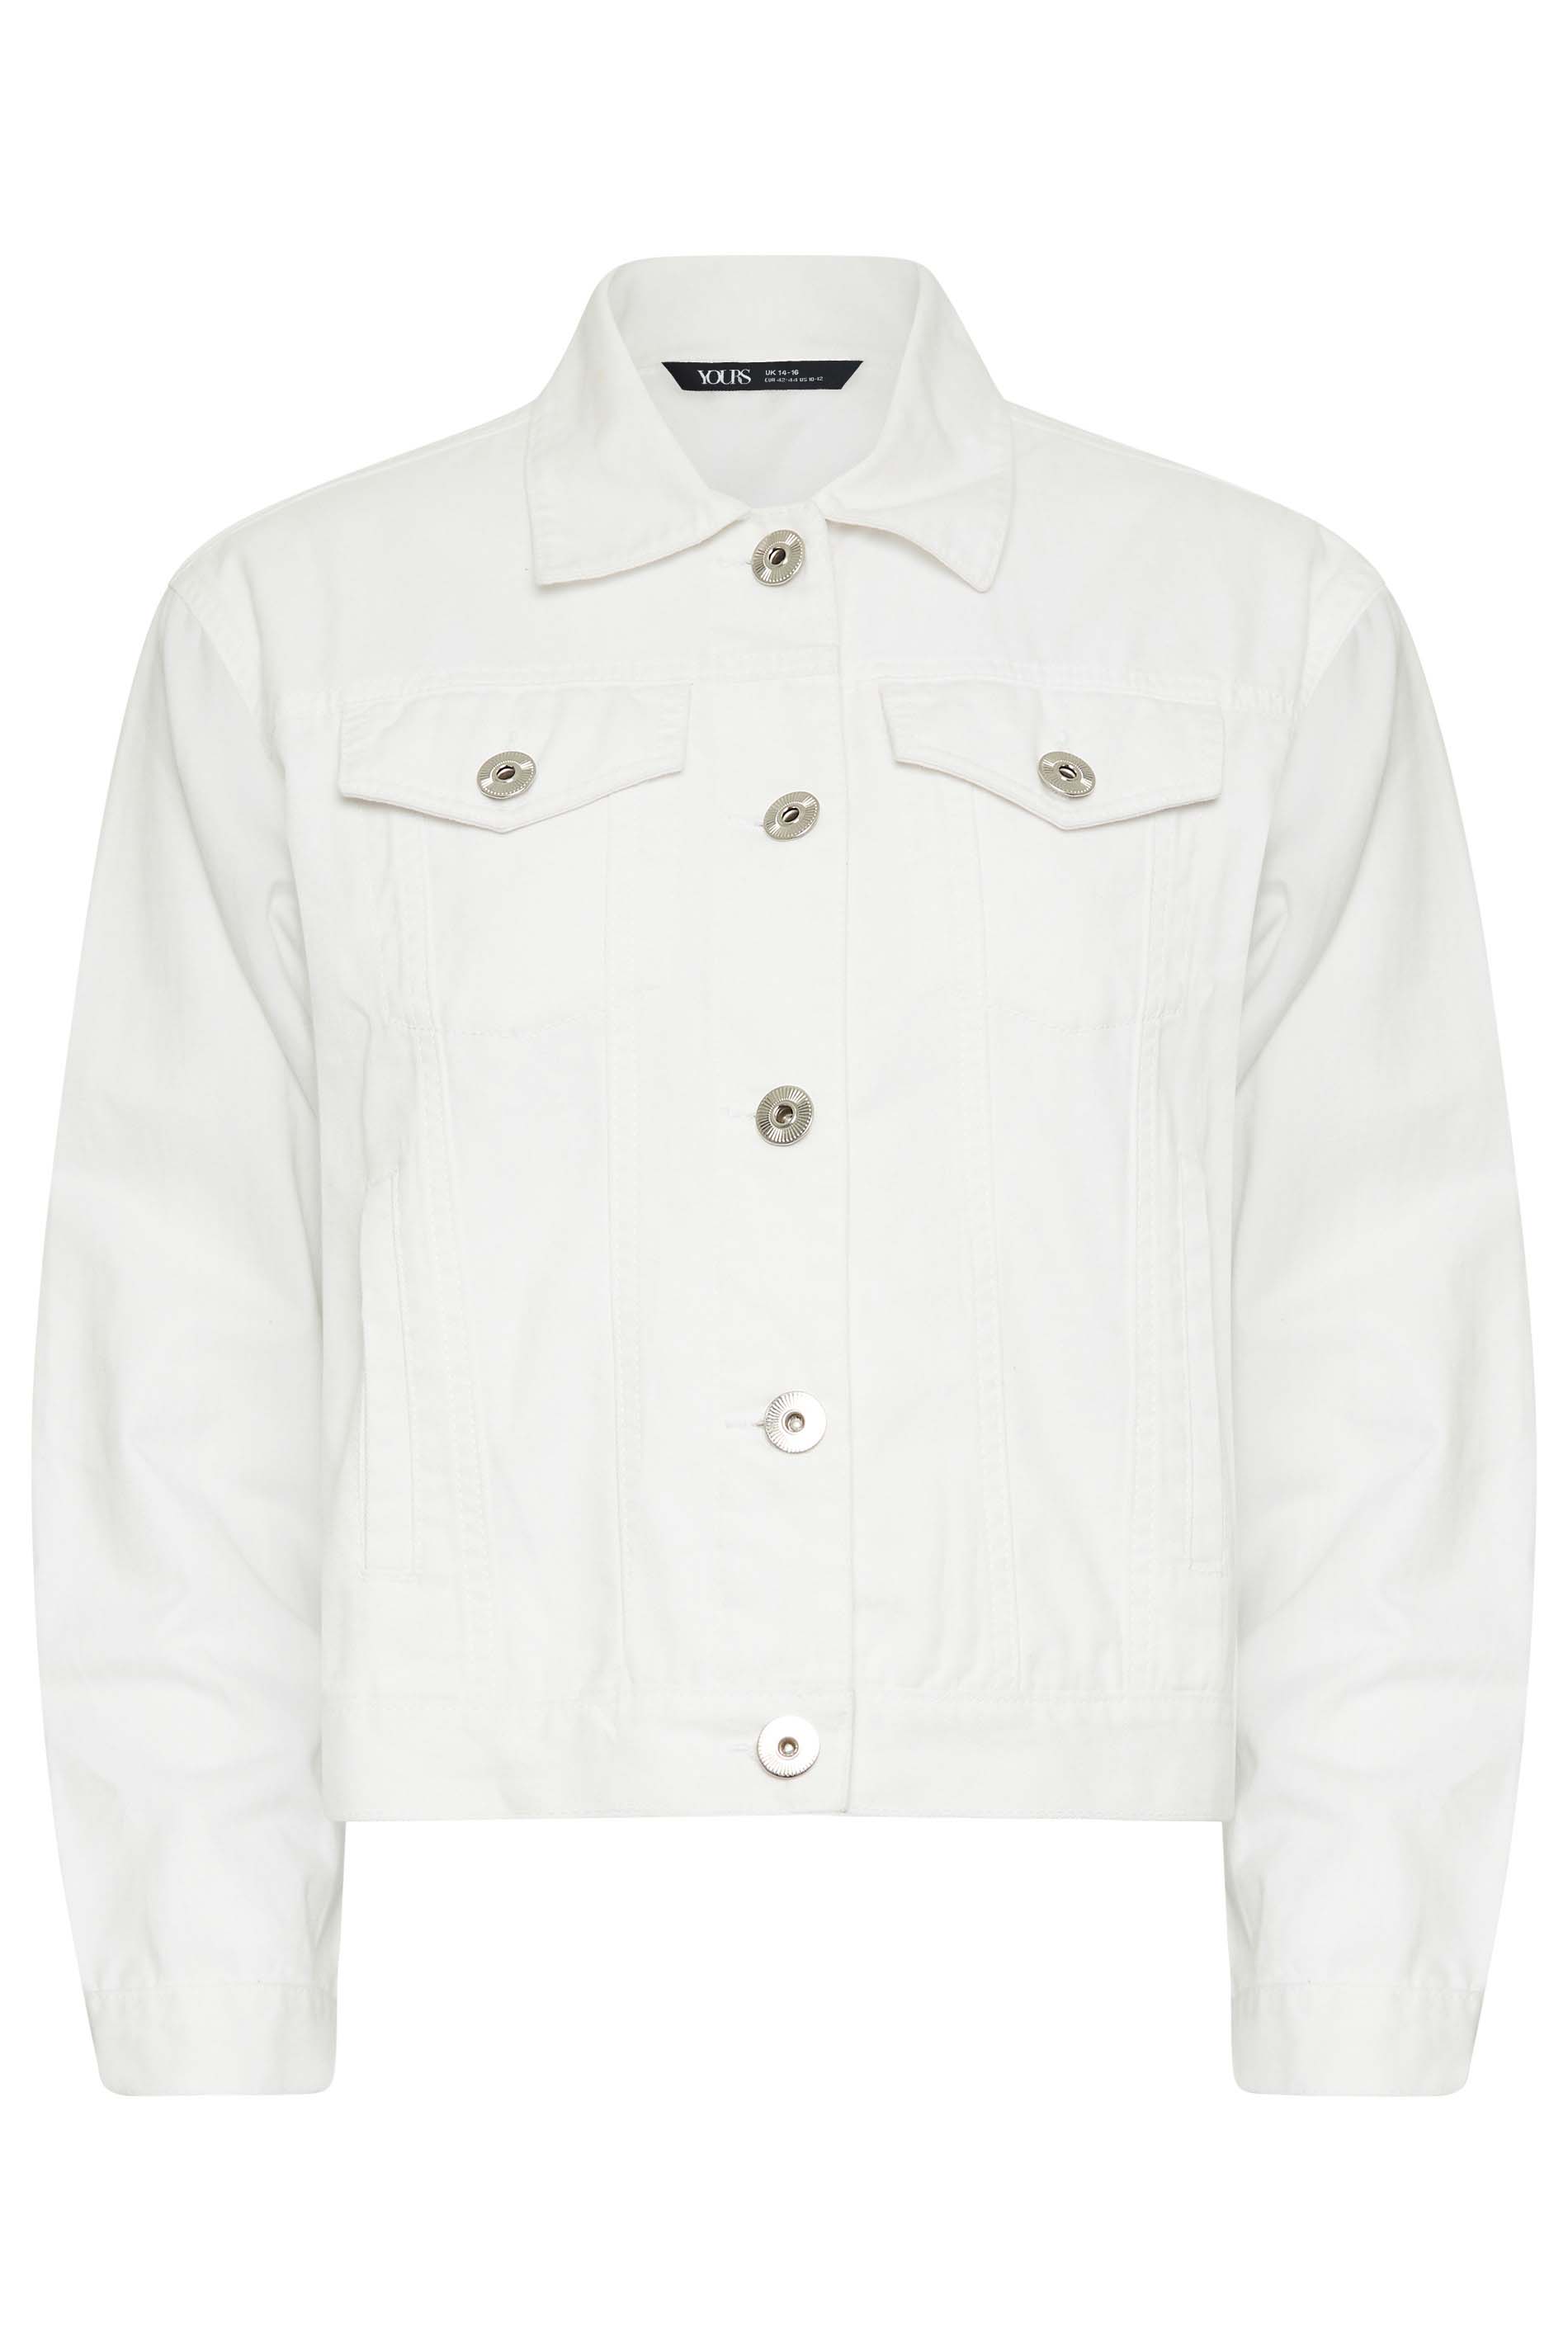 YOURS PETITE Plus Size White Denim Jacket | Yours Clothing 1